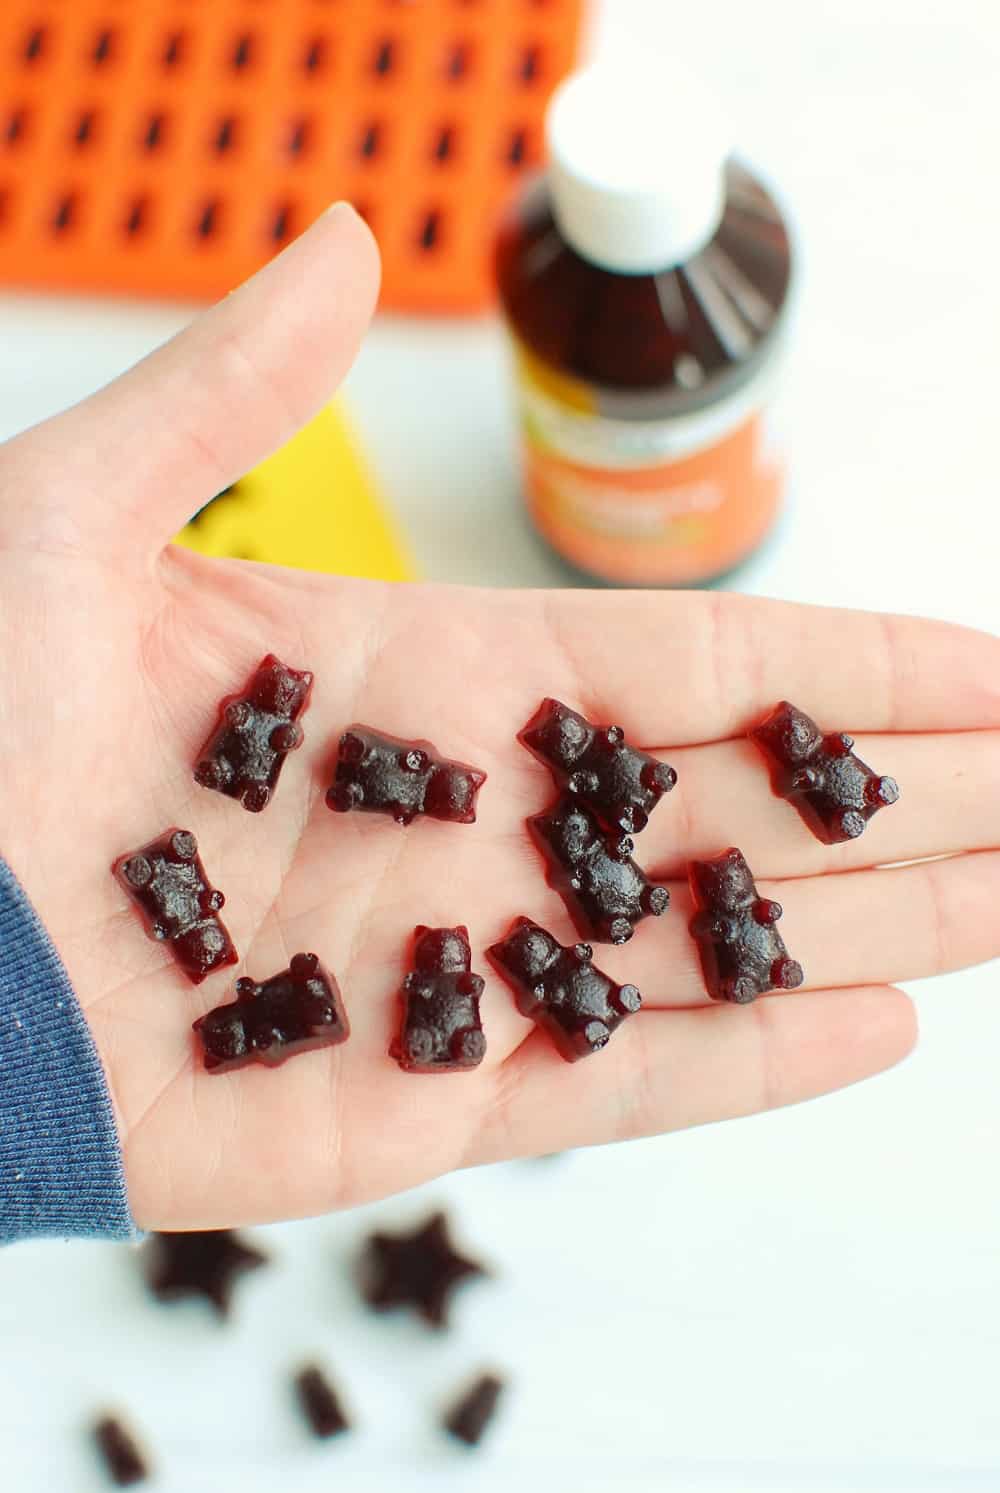 A bunch of homemade elderberry gummy bears in a woman's hand.